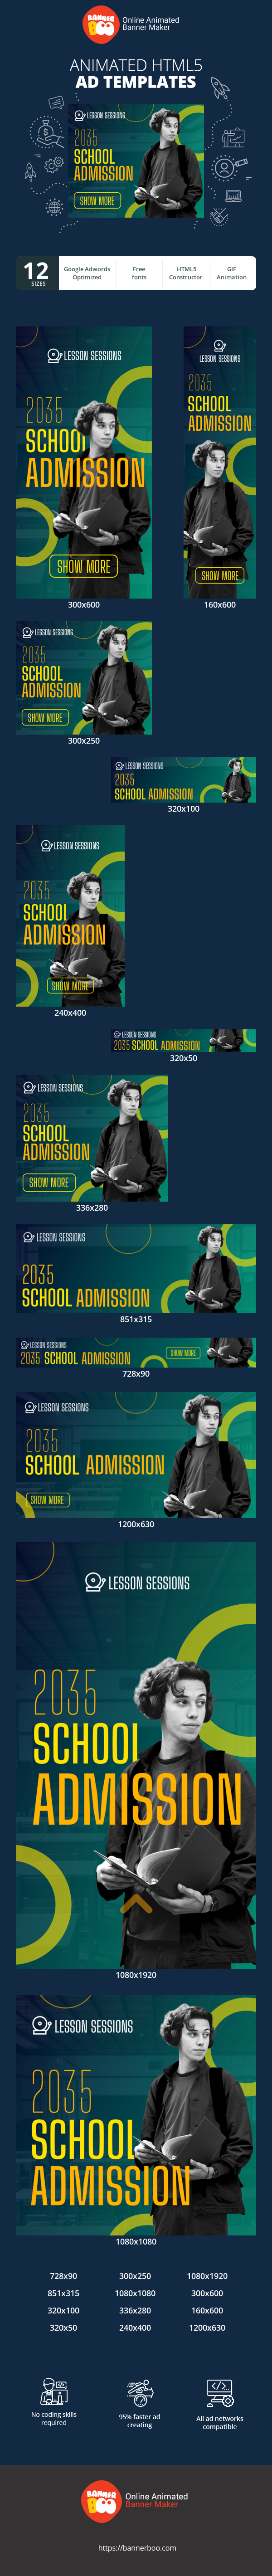 2035 School Admission — Education